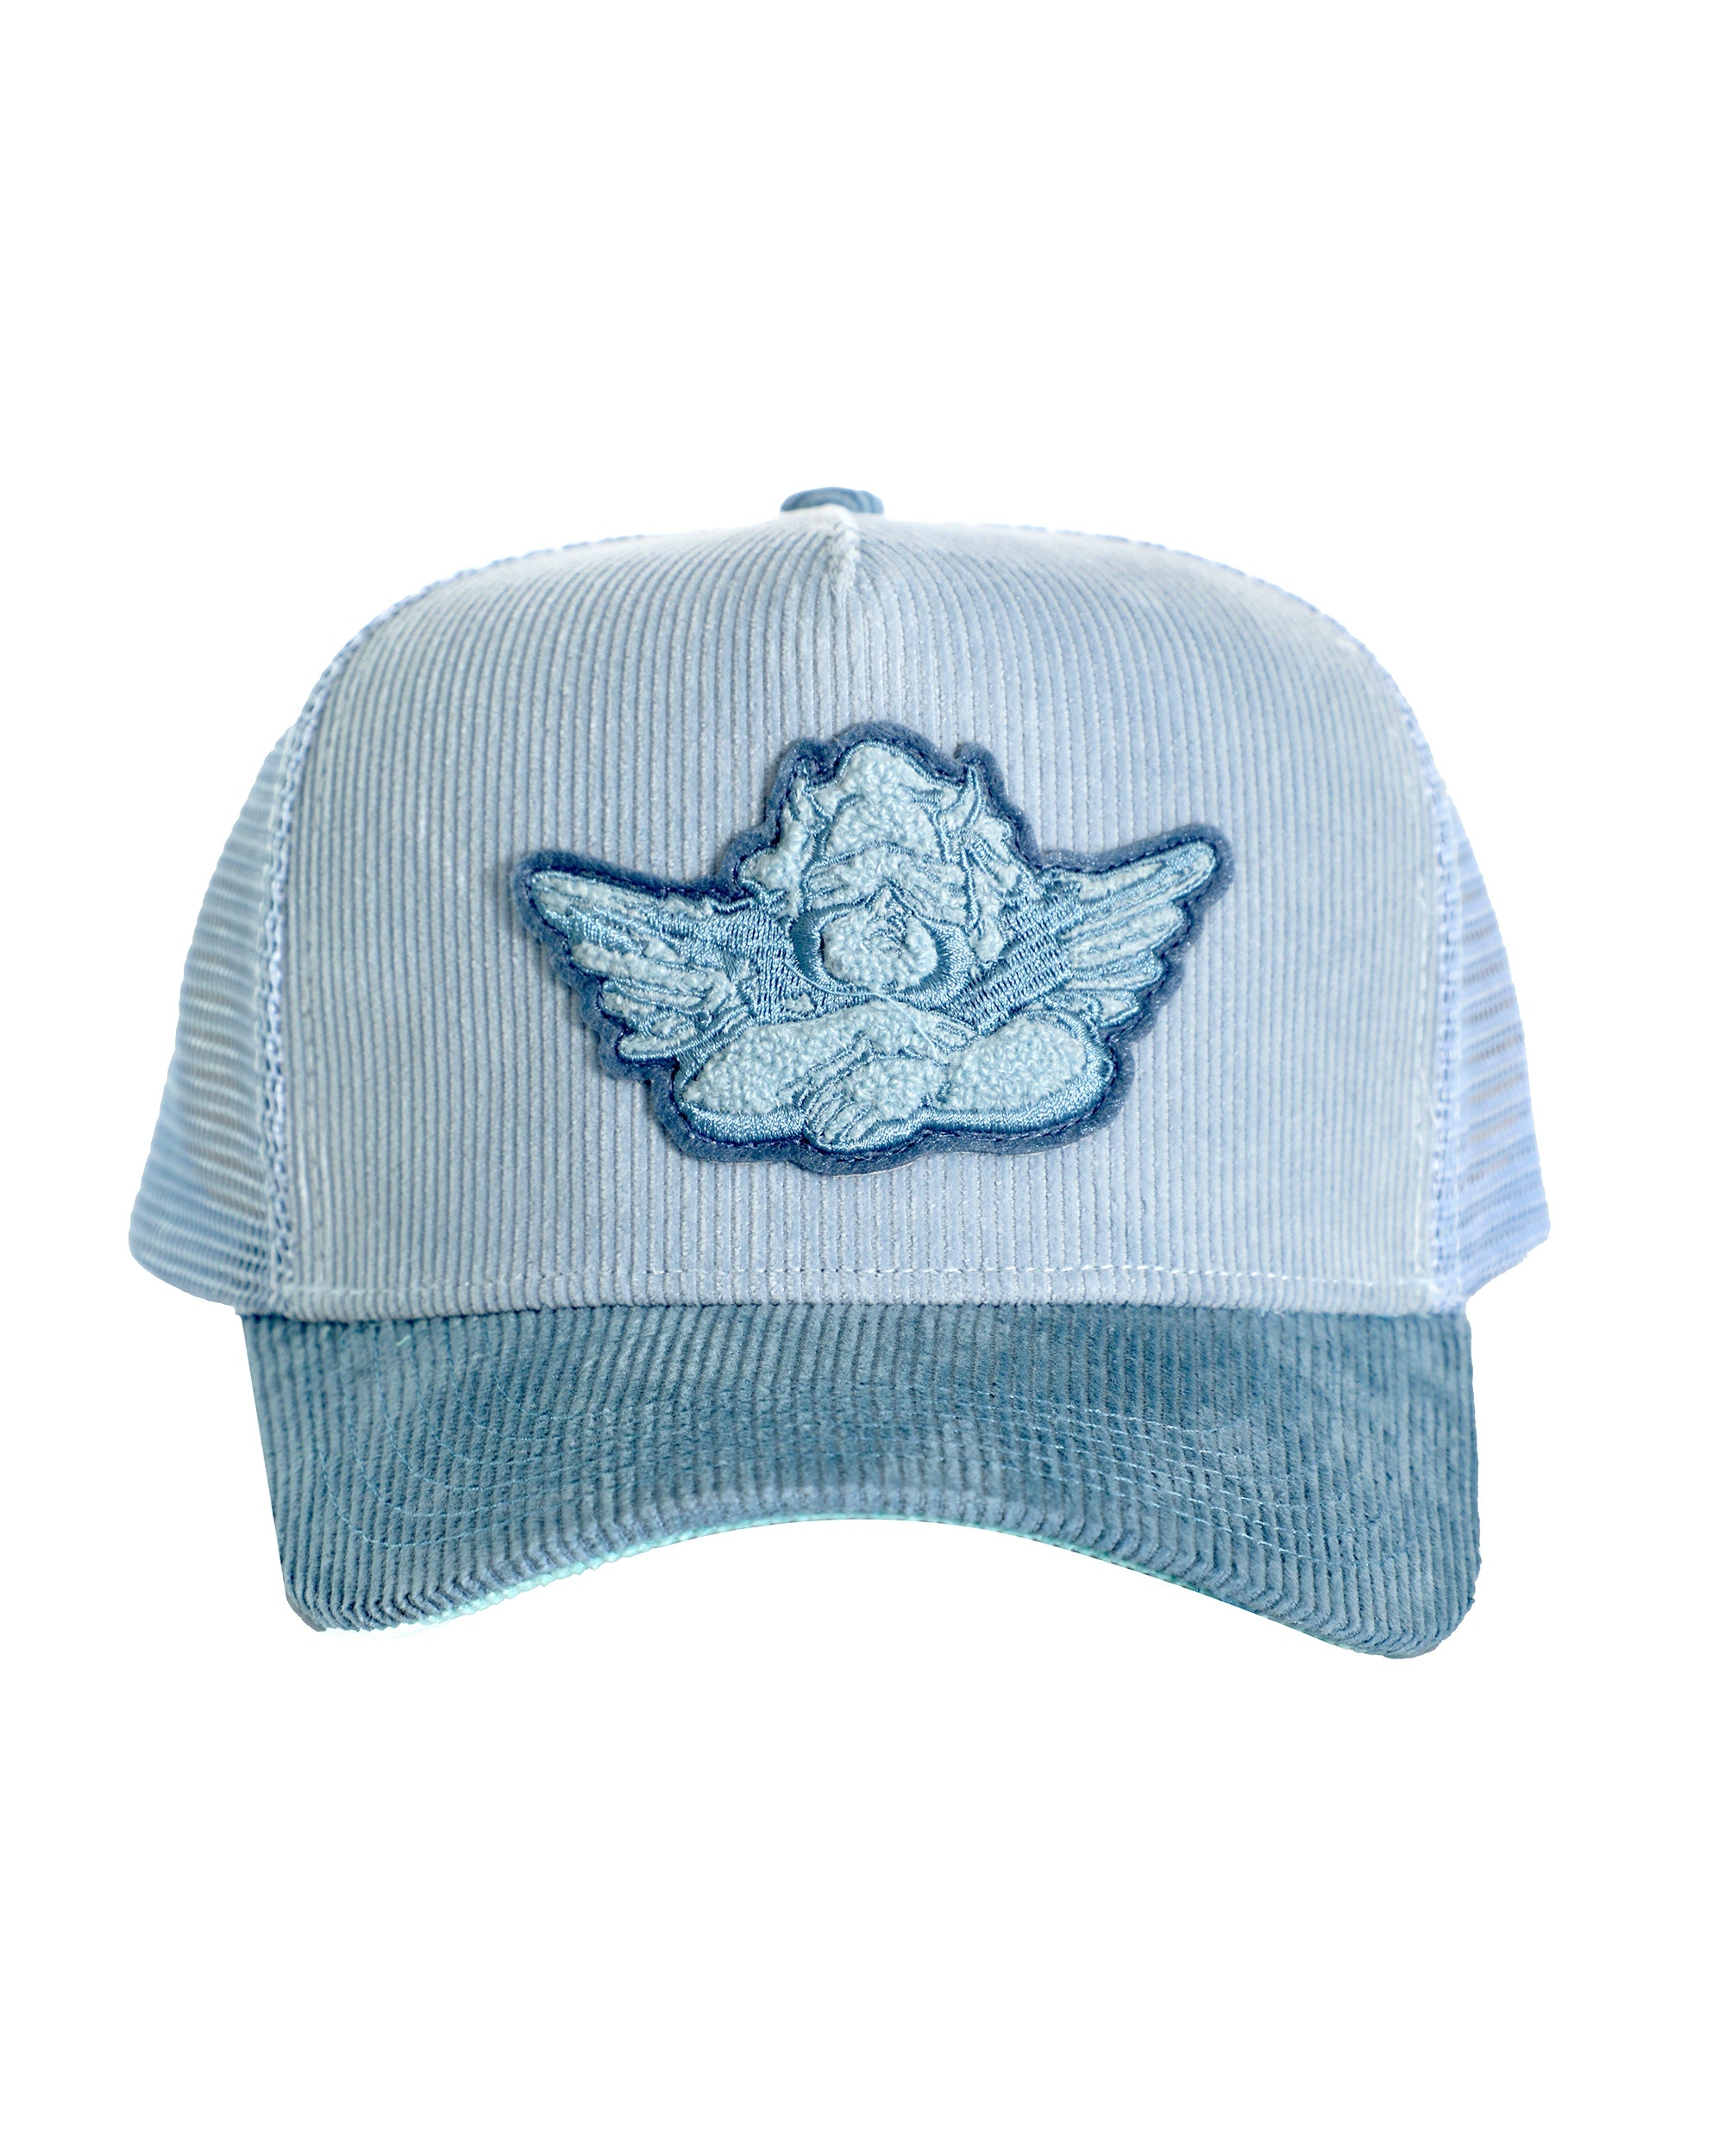 Summer Blues Trucker Hat